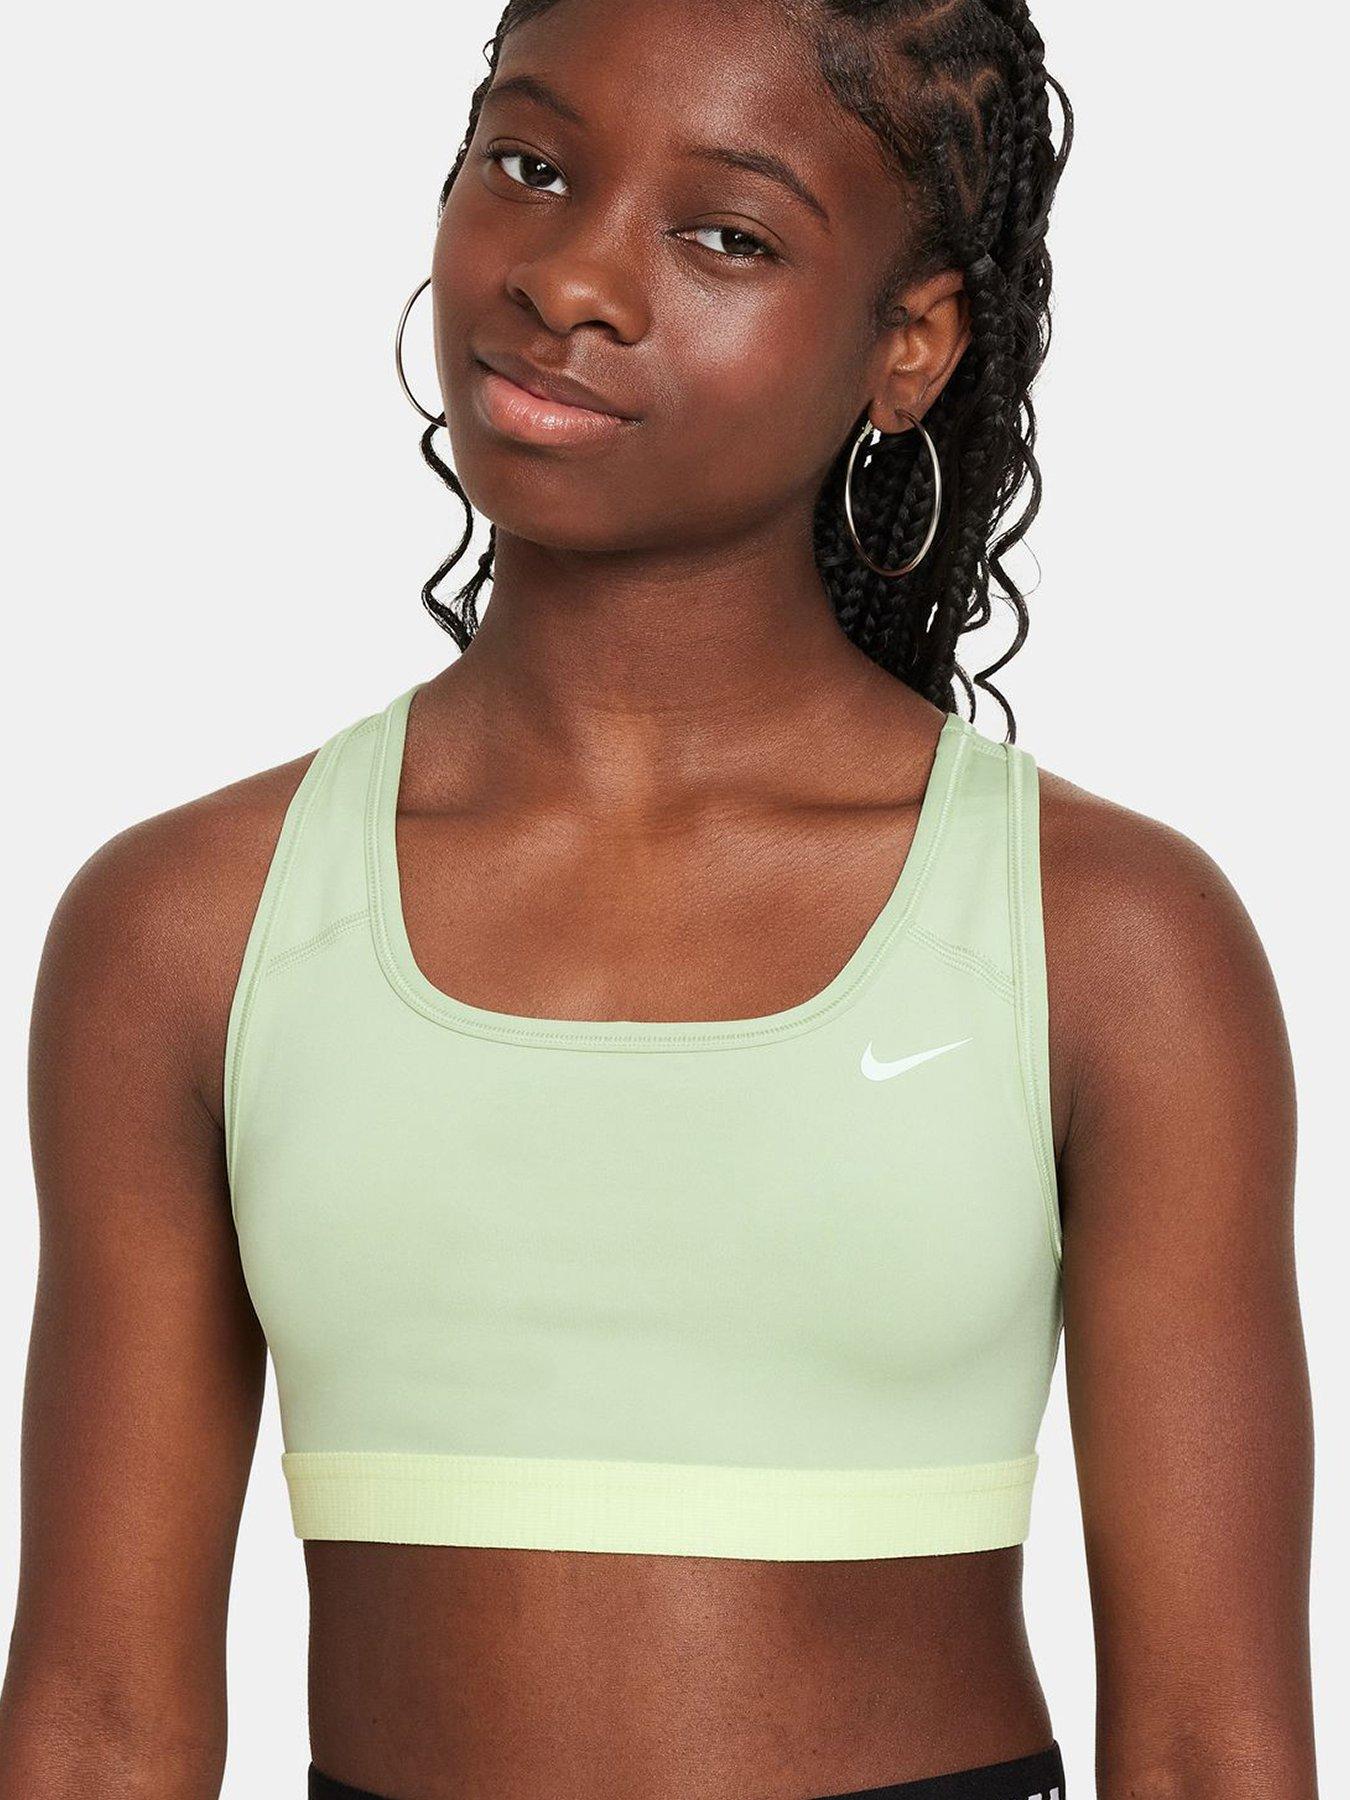 Nike Trophy Big Kids' (Girls') Sports Bra BLACK/BLACK/WHITE